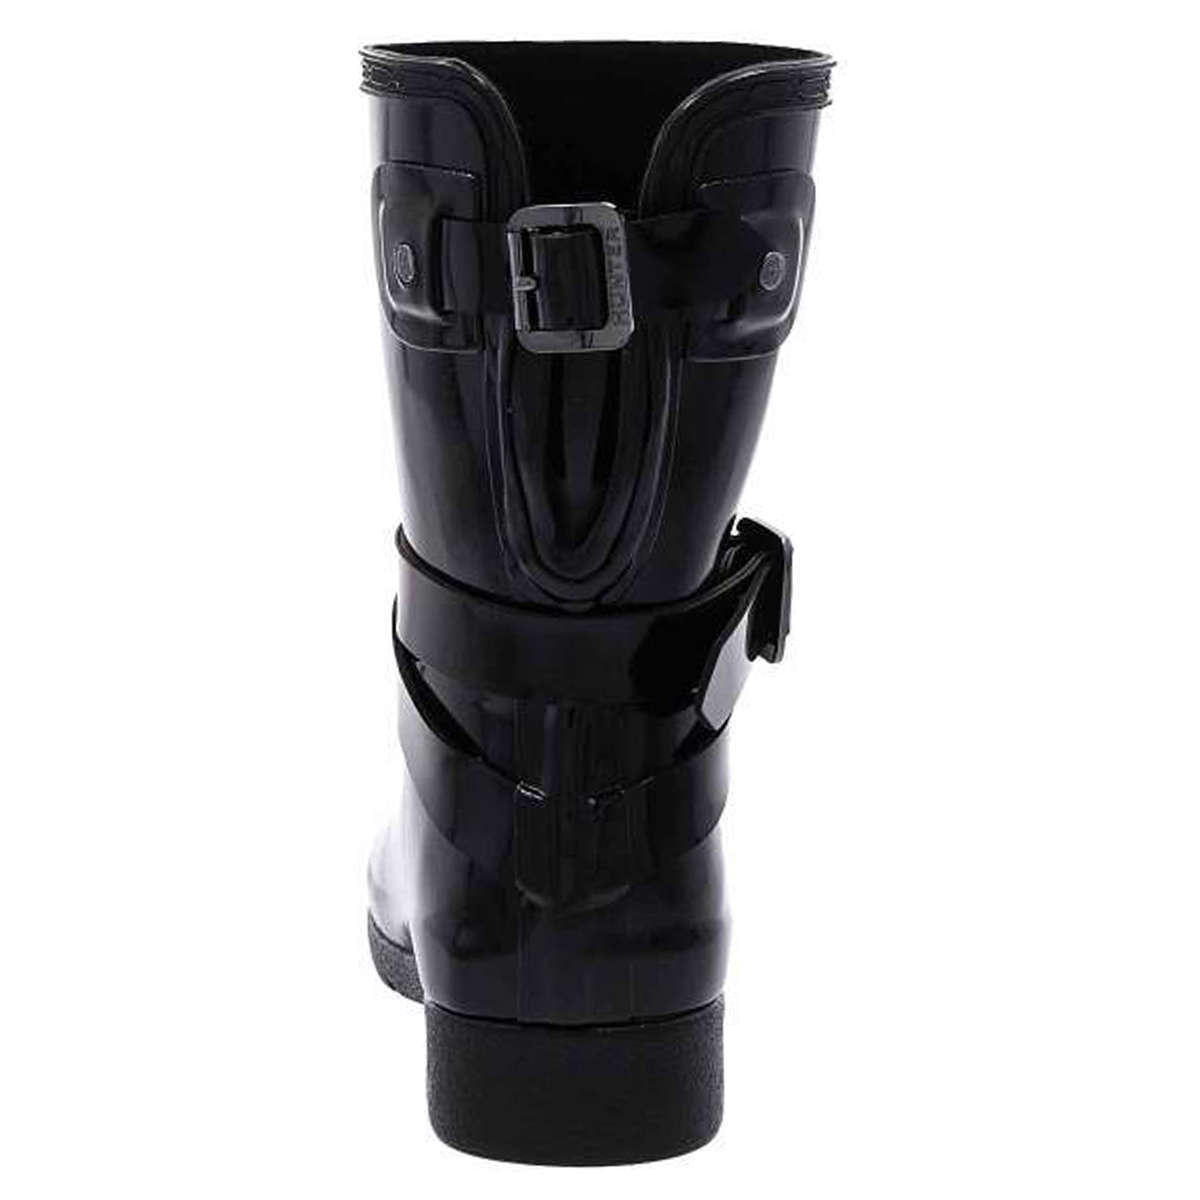 Hunter Refined Gloss Rubber Adjustable Women's Short Wellington Boots#color_black